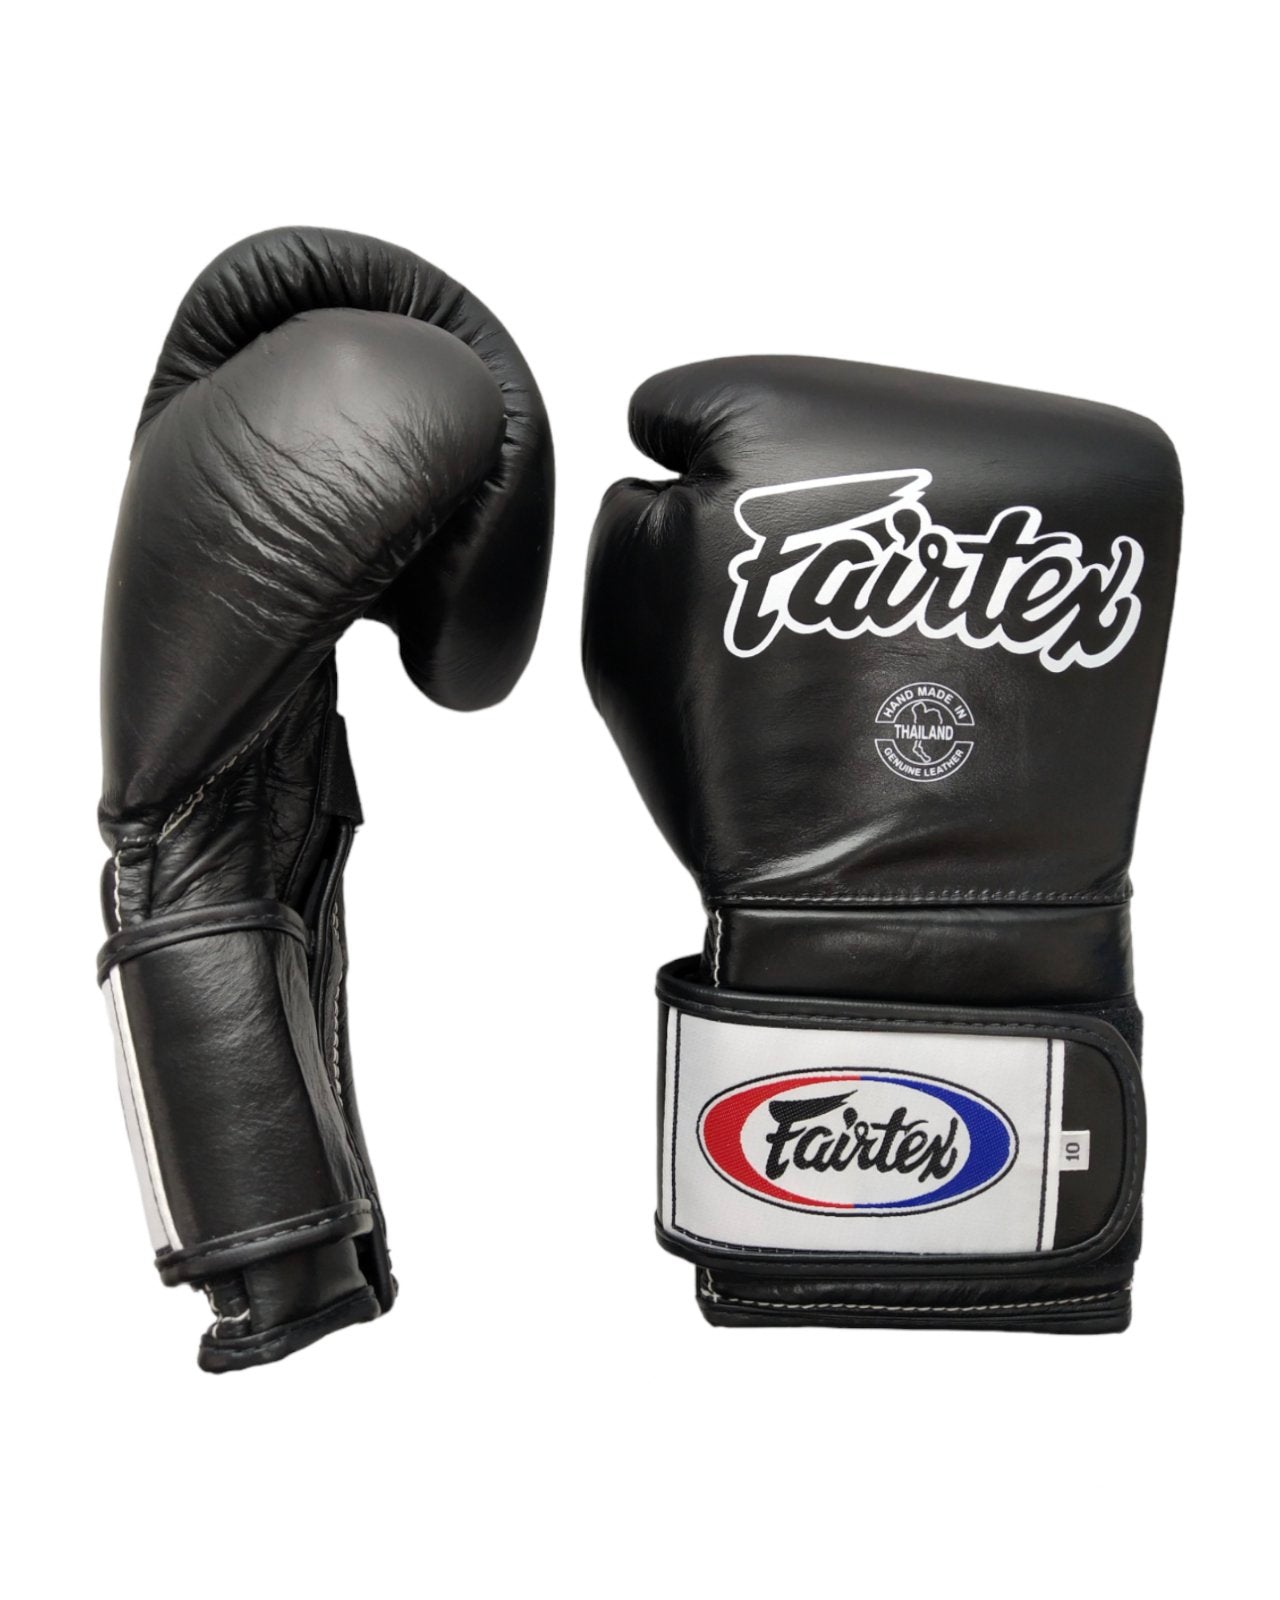 FAIRTEX BGV9 Boxing Gloves [Black/Black Piping]